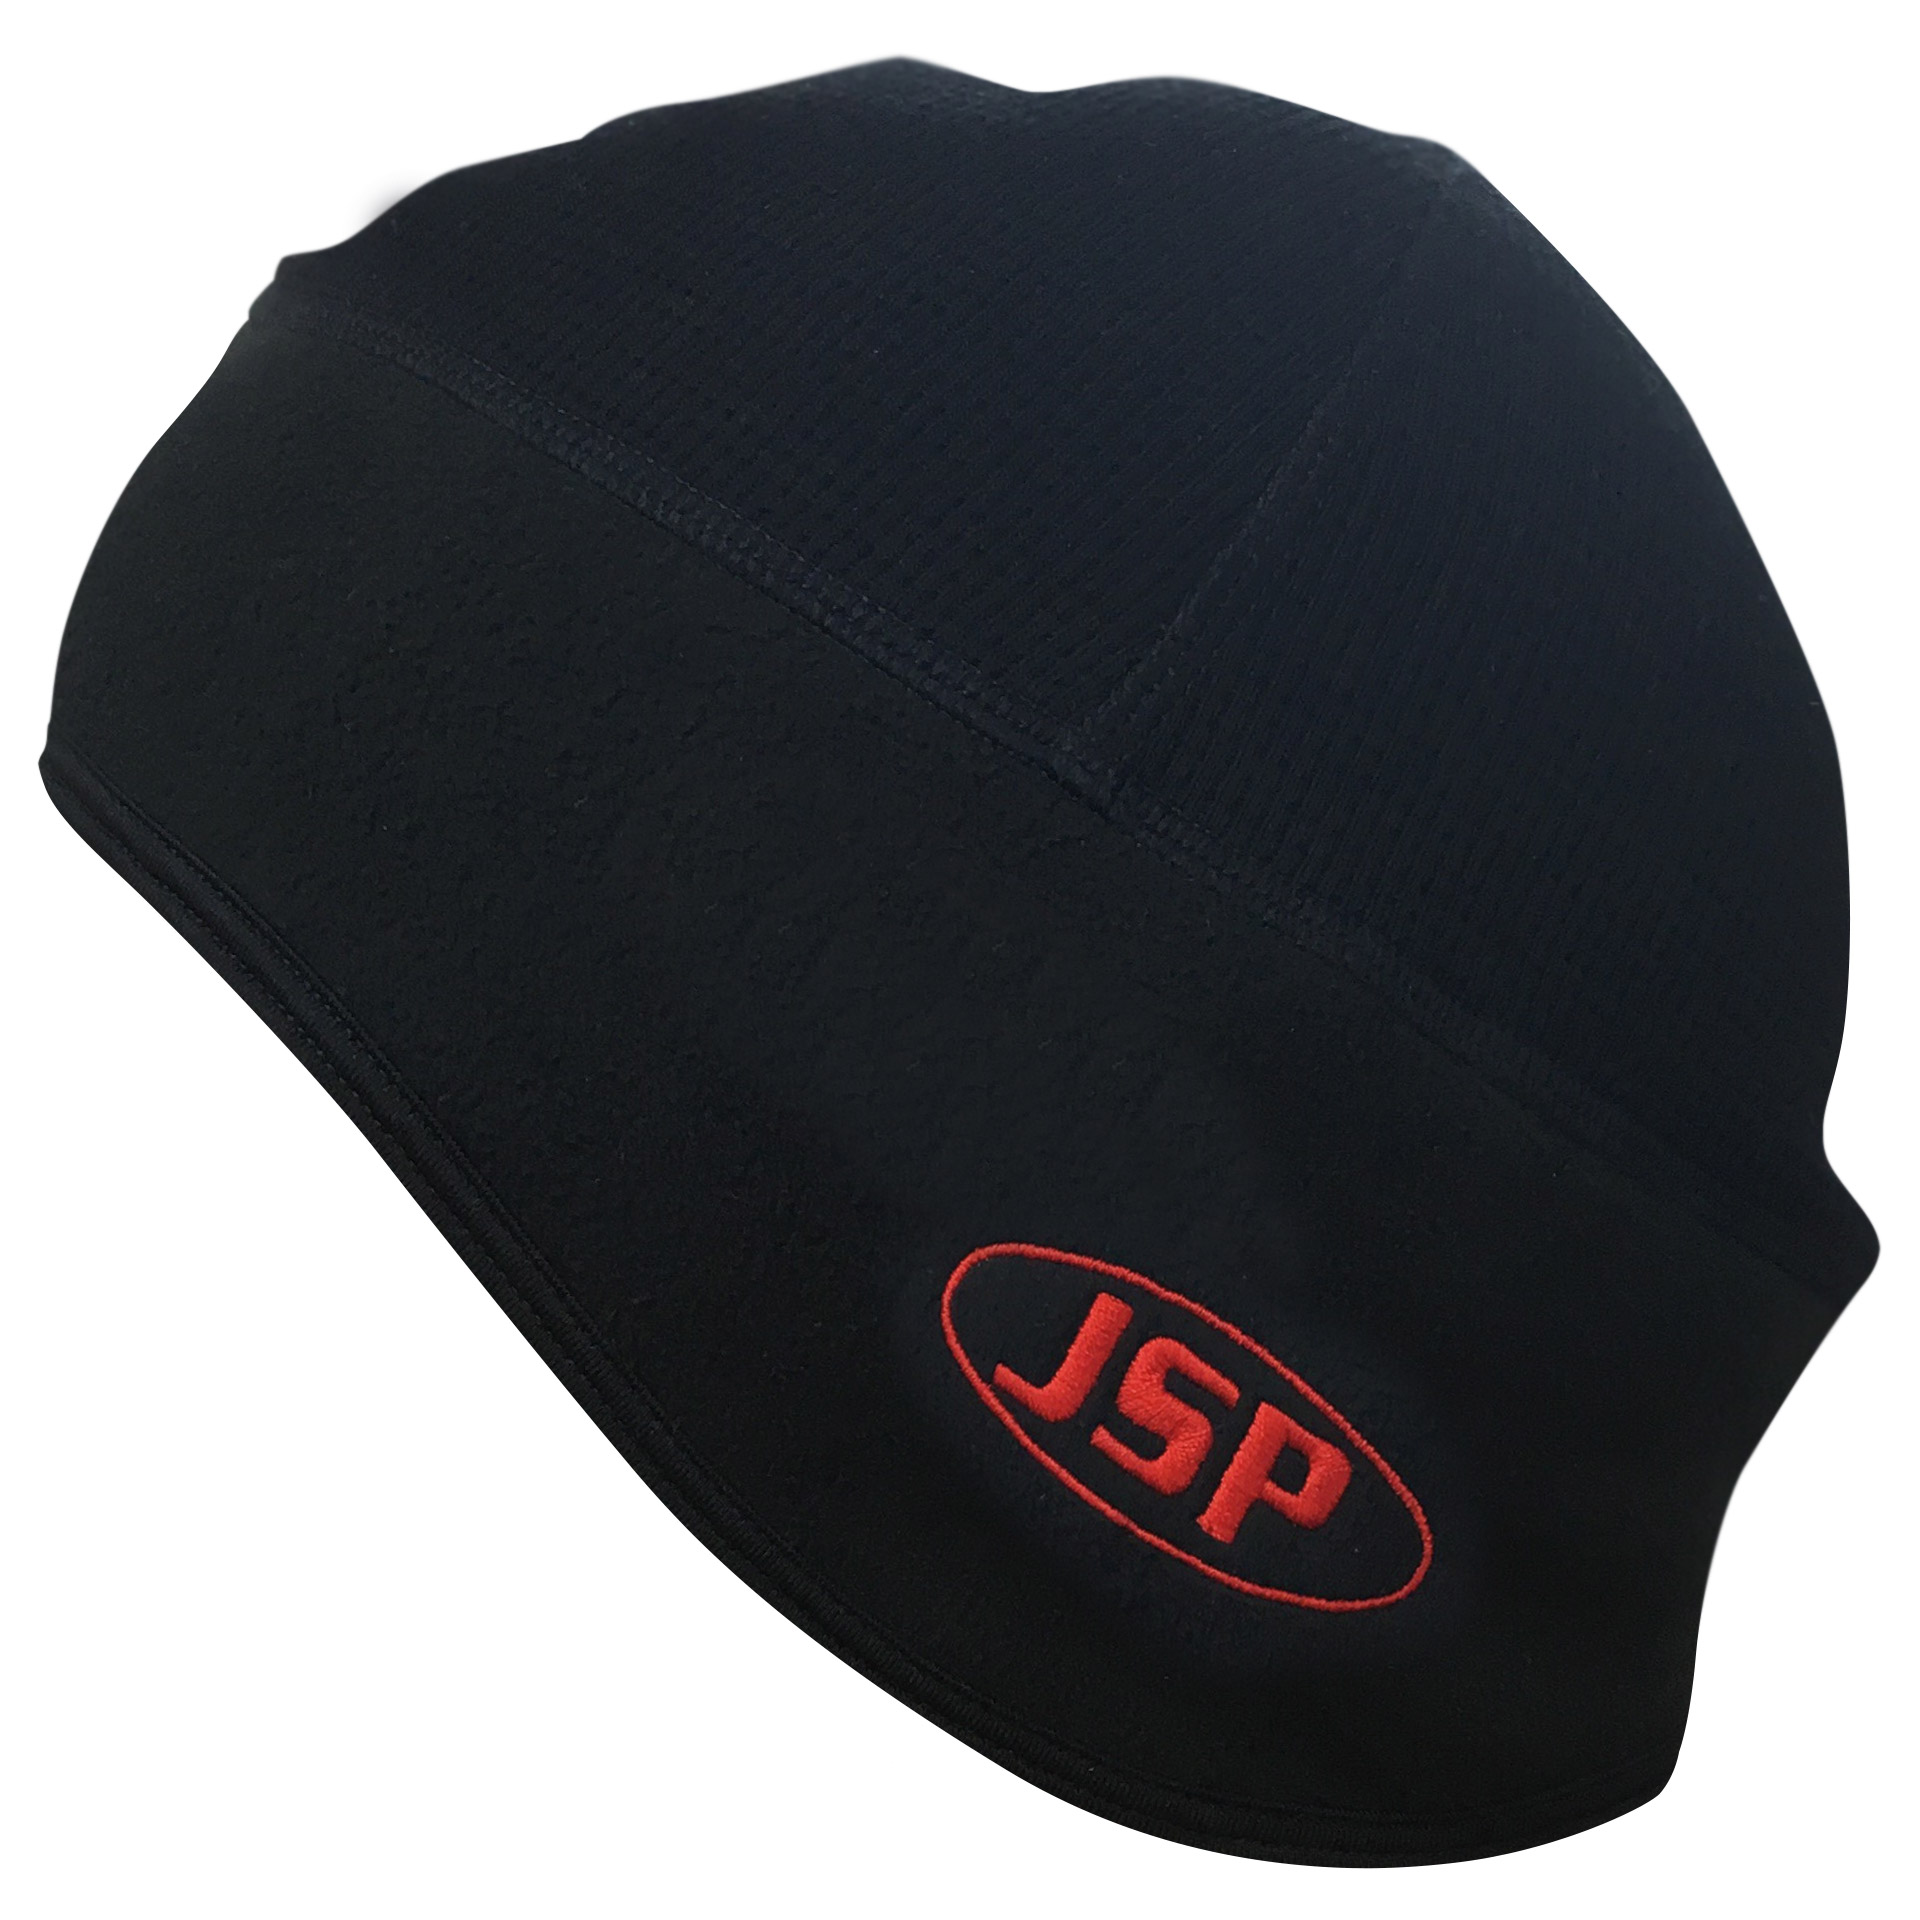 JSP Surefit™ Thermal Safety Helm Beanie 